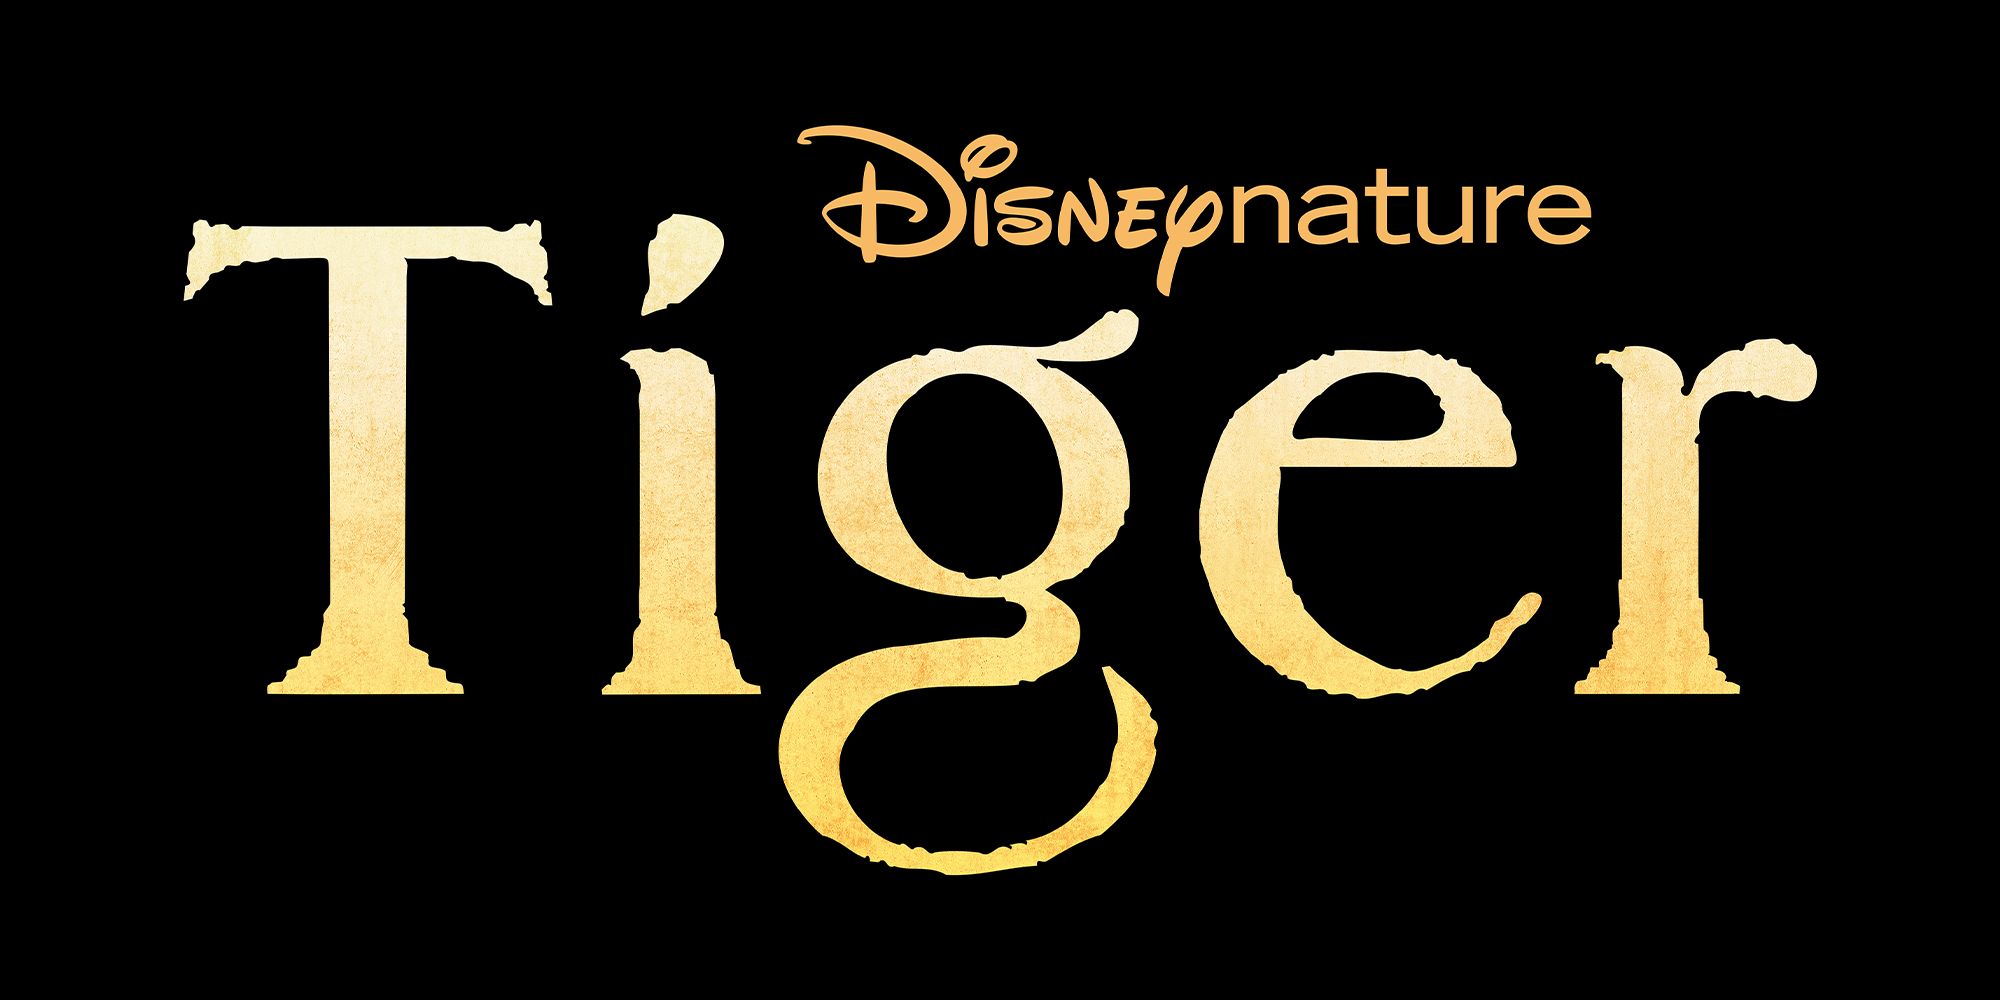 Disneynature Tiger title card